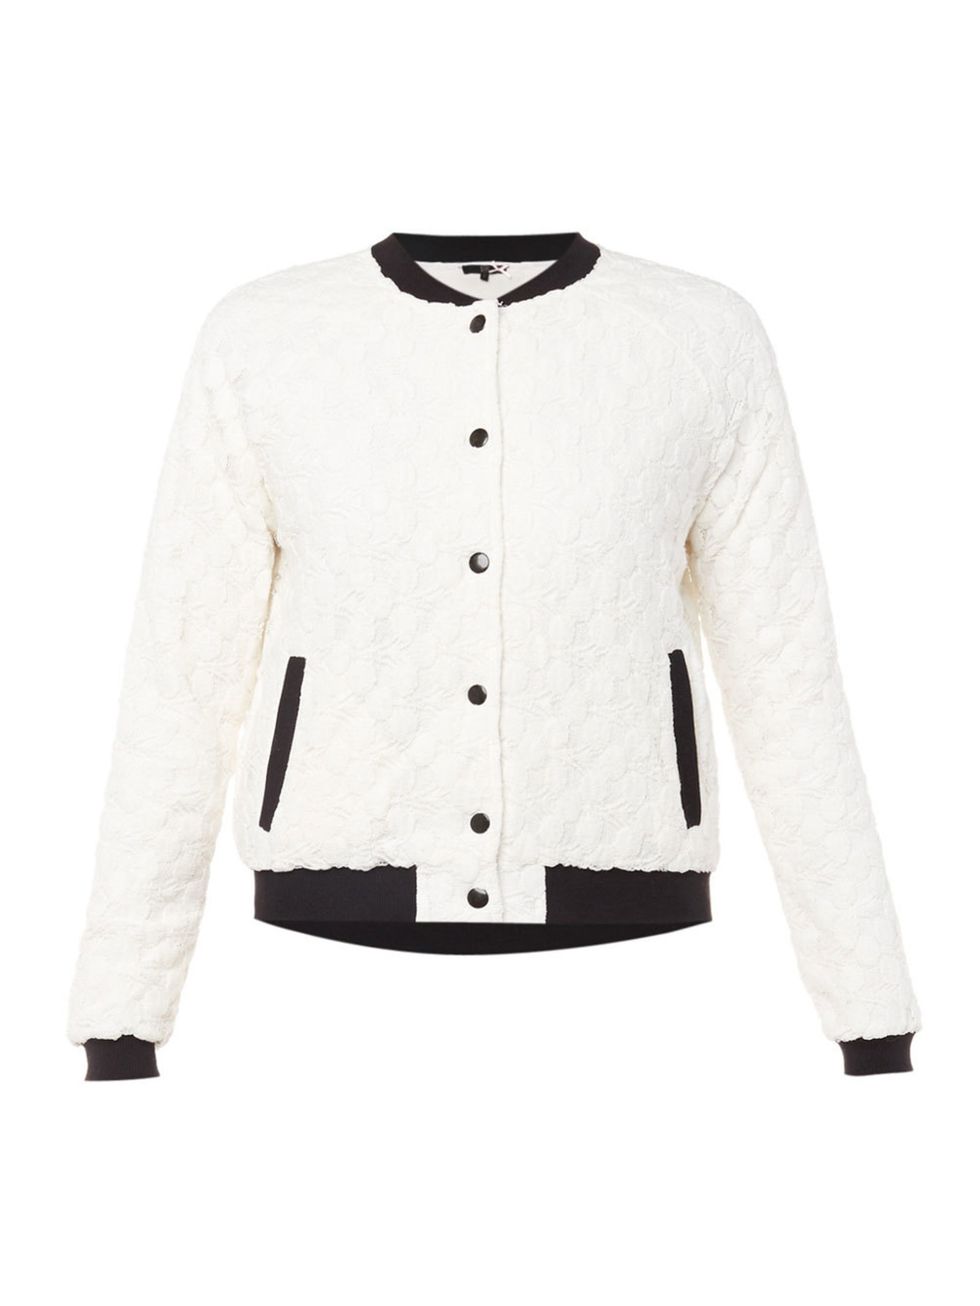 Collar, Sleeve, Dress shirt, Textile, Outerwear, White, Style, Coat, Blazer, Pattern, 